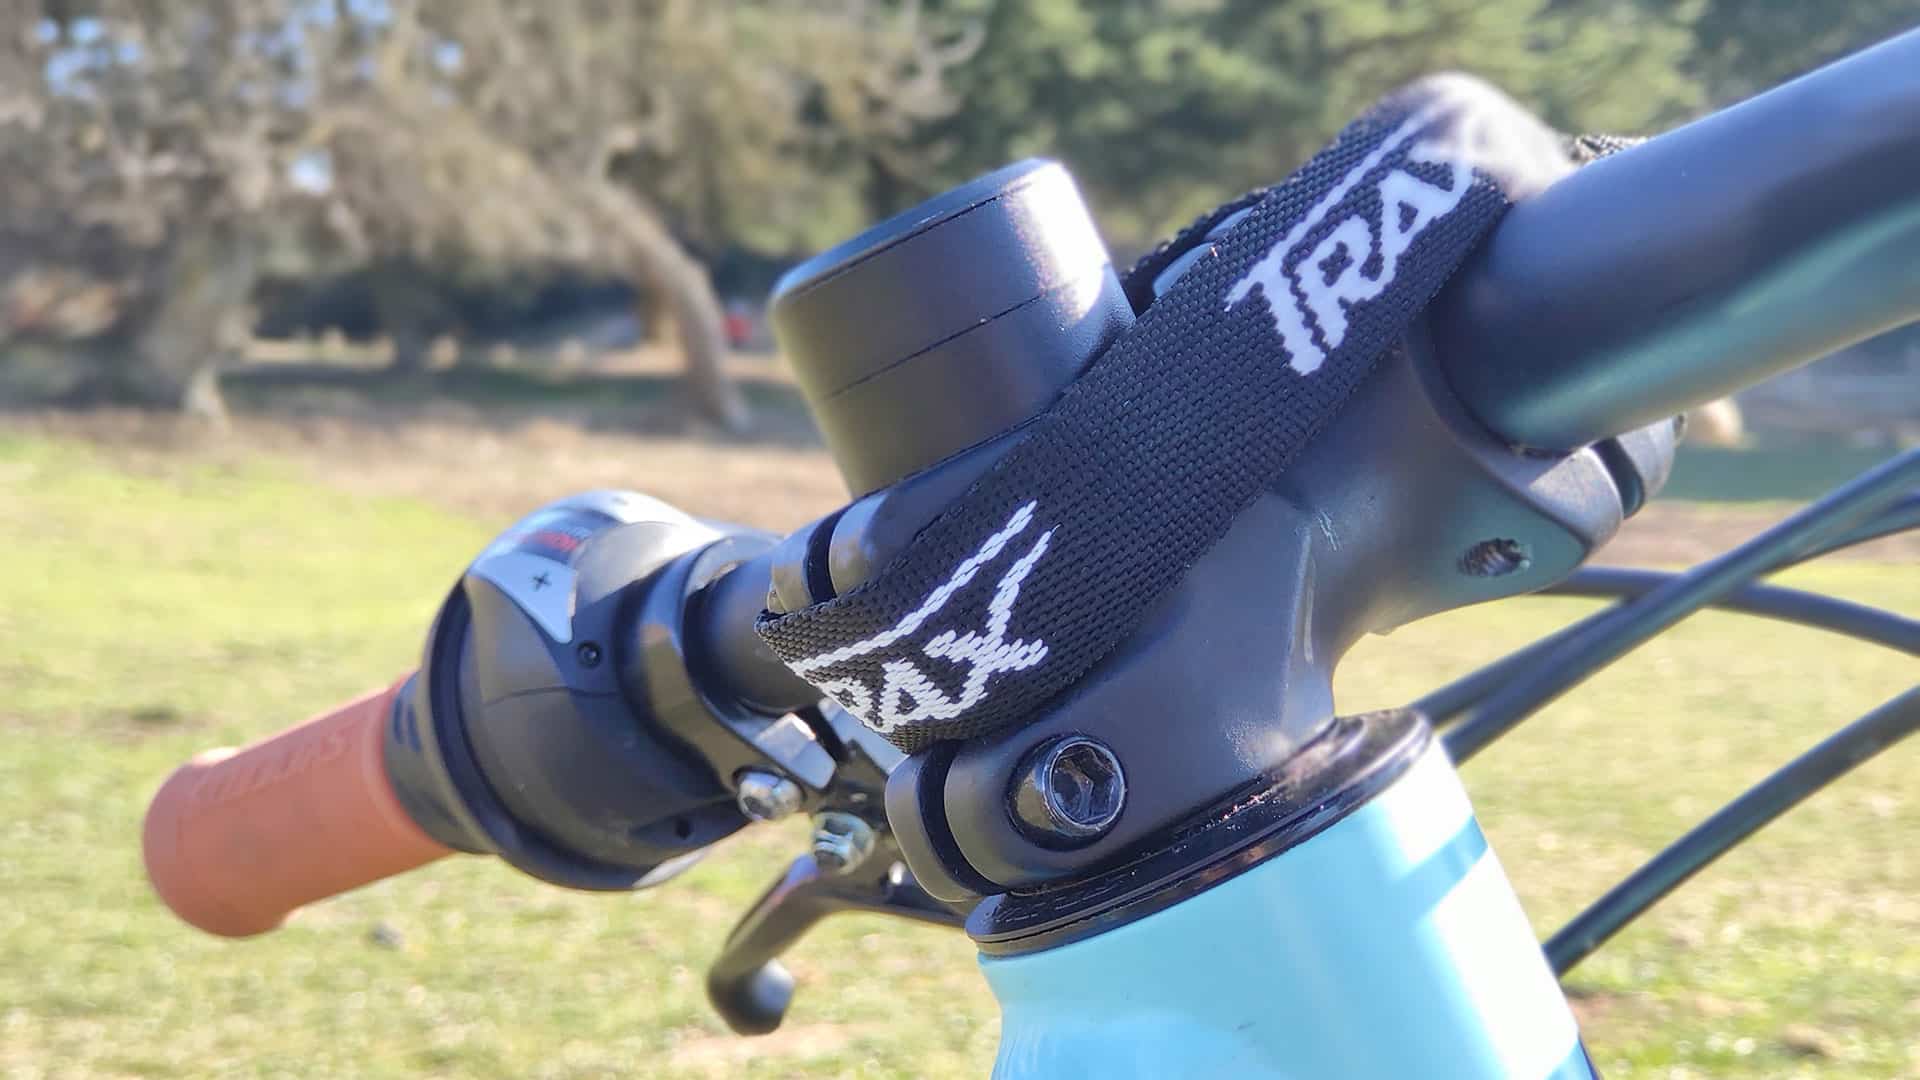 TRAX MTB Unisex Adult Tow Bike / Cycle / E-Bike - Black, Standard :  : Sports & Outdoors